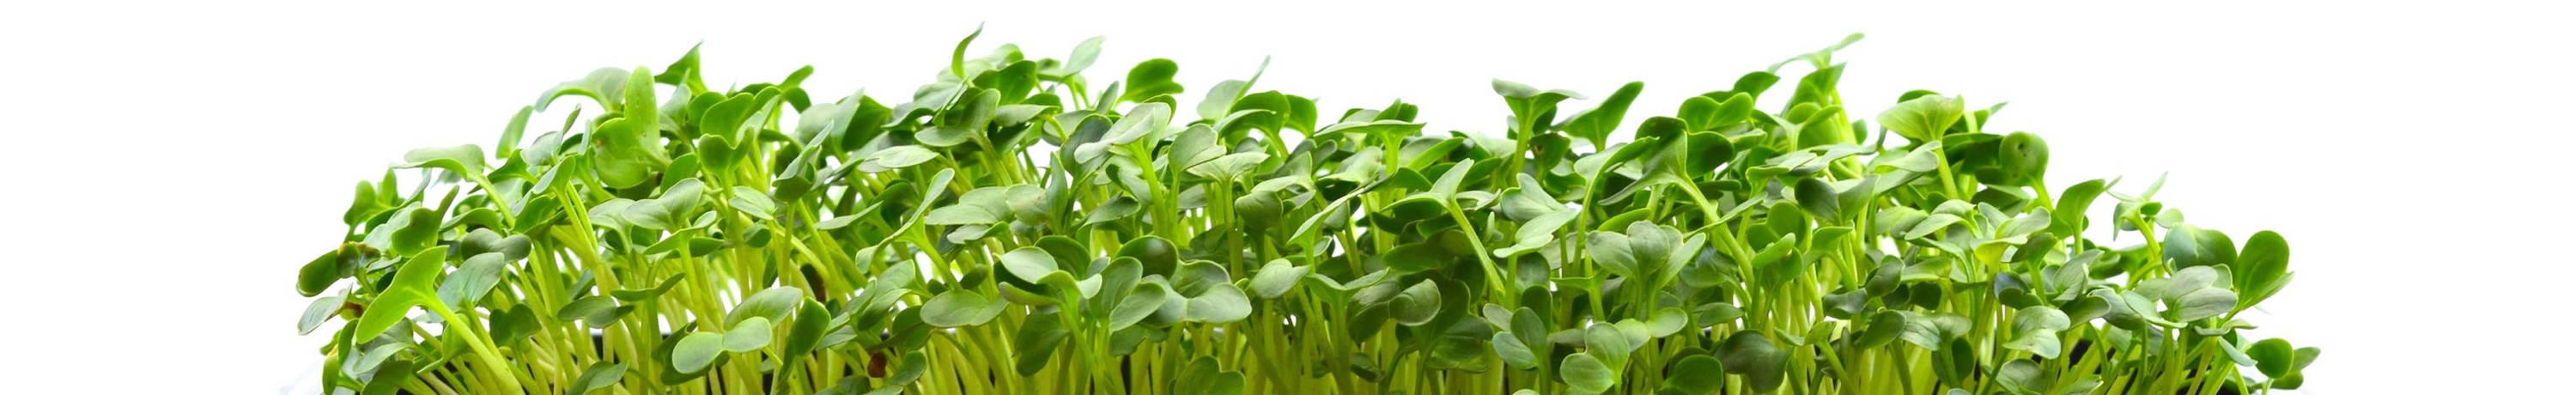 Fully grown microgreens